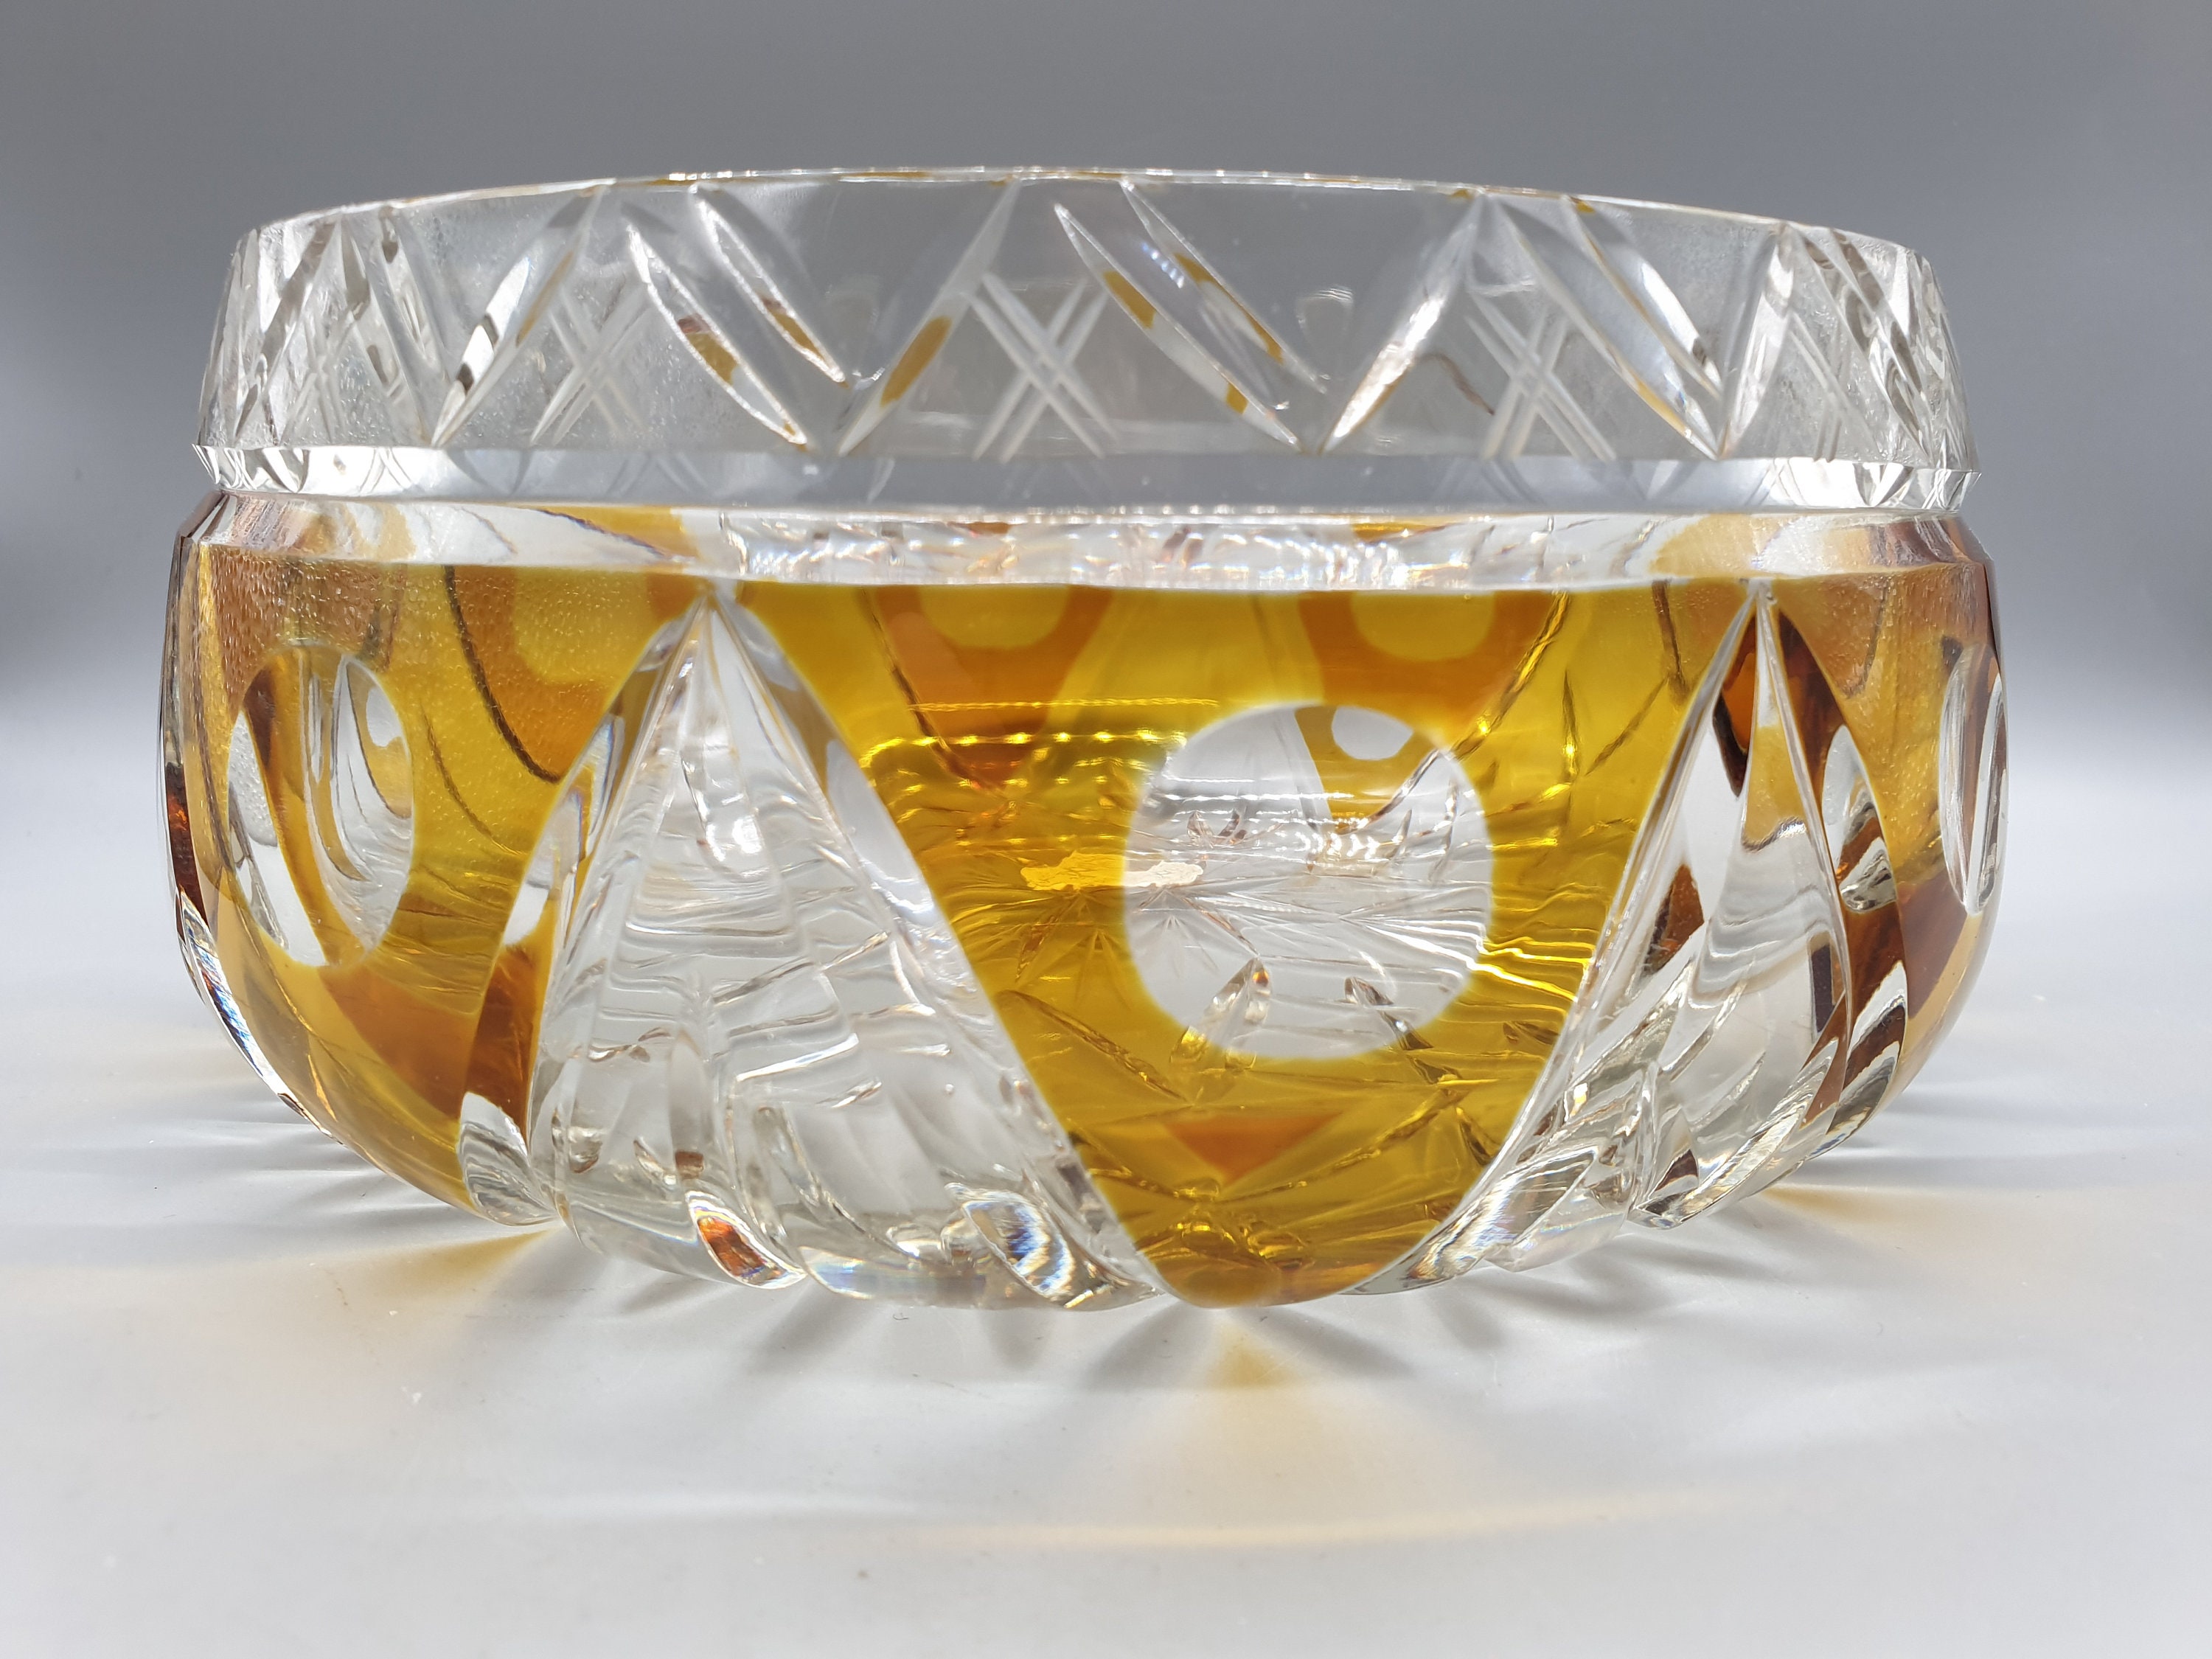 Amber Vintage Bleikristall Glass Coloured With German Glass Large Bowl - Etsy Decorations Lead Echt Vintage Cut Handgeschliffen Crystal